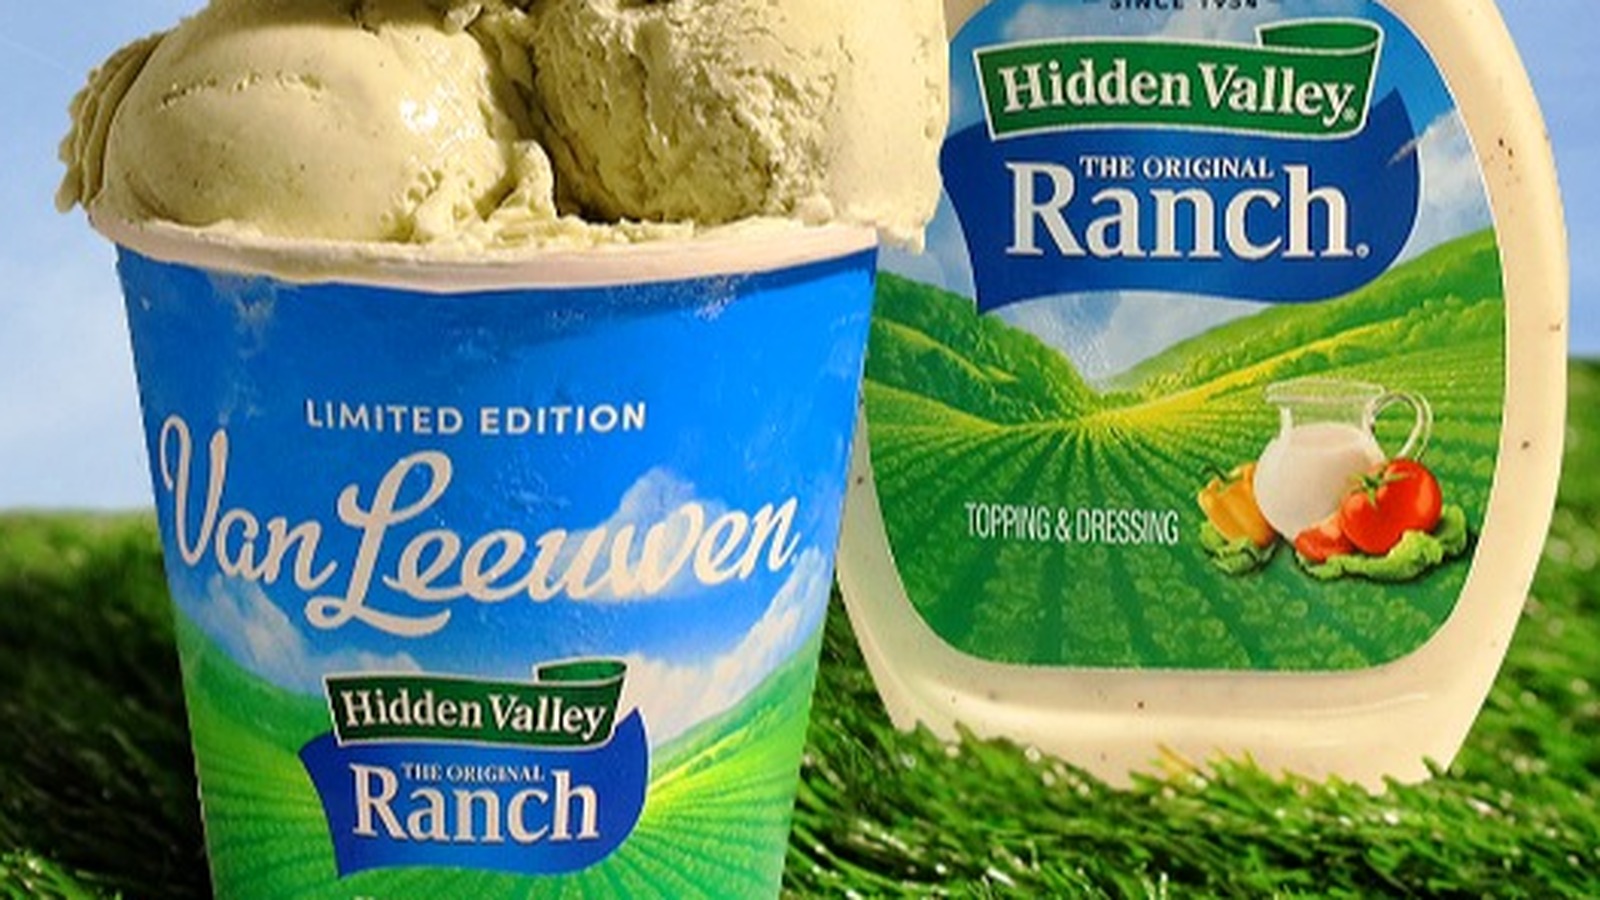 Hidden Valley Is Releasing RanchFlavored Ice Cream To Celebrate